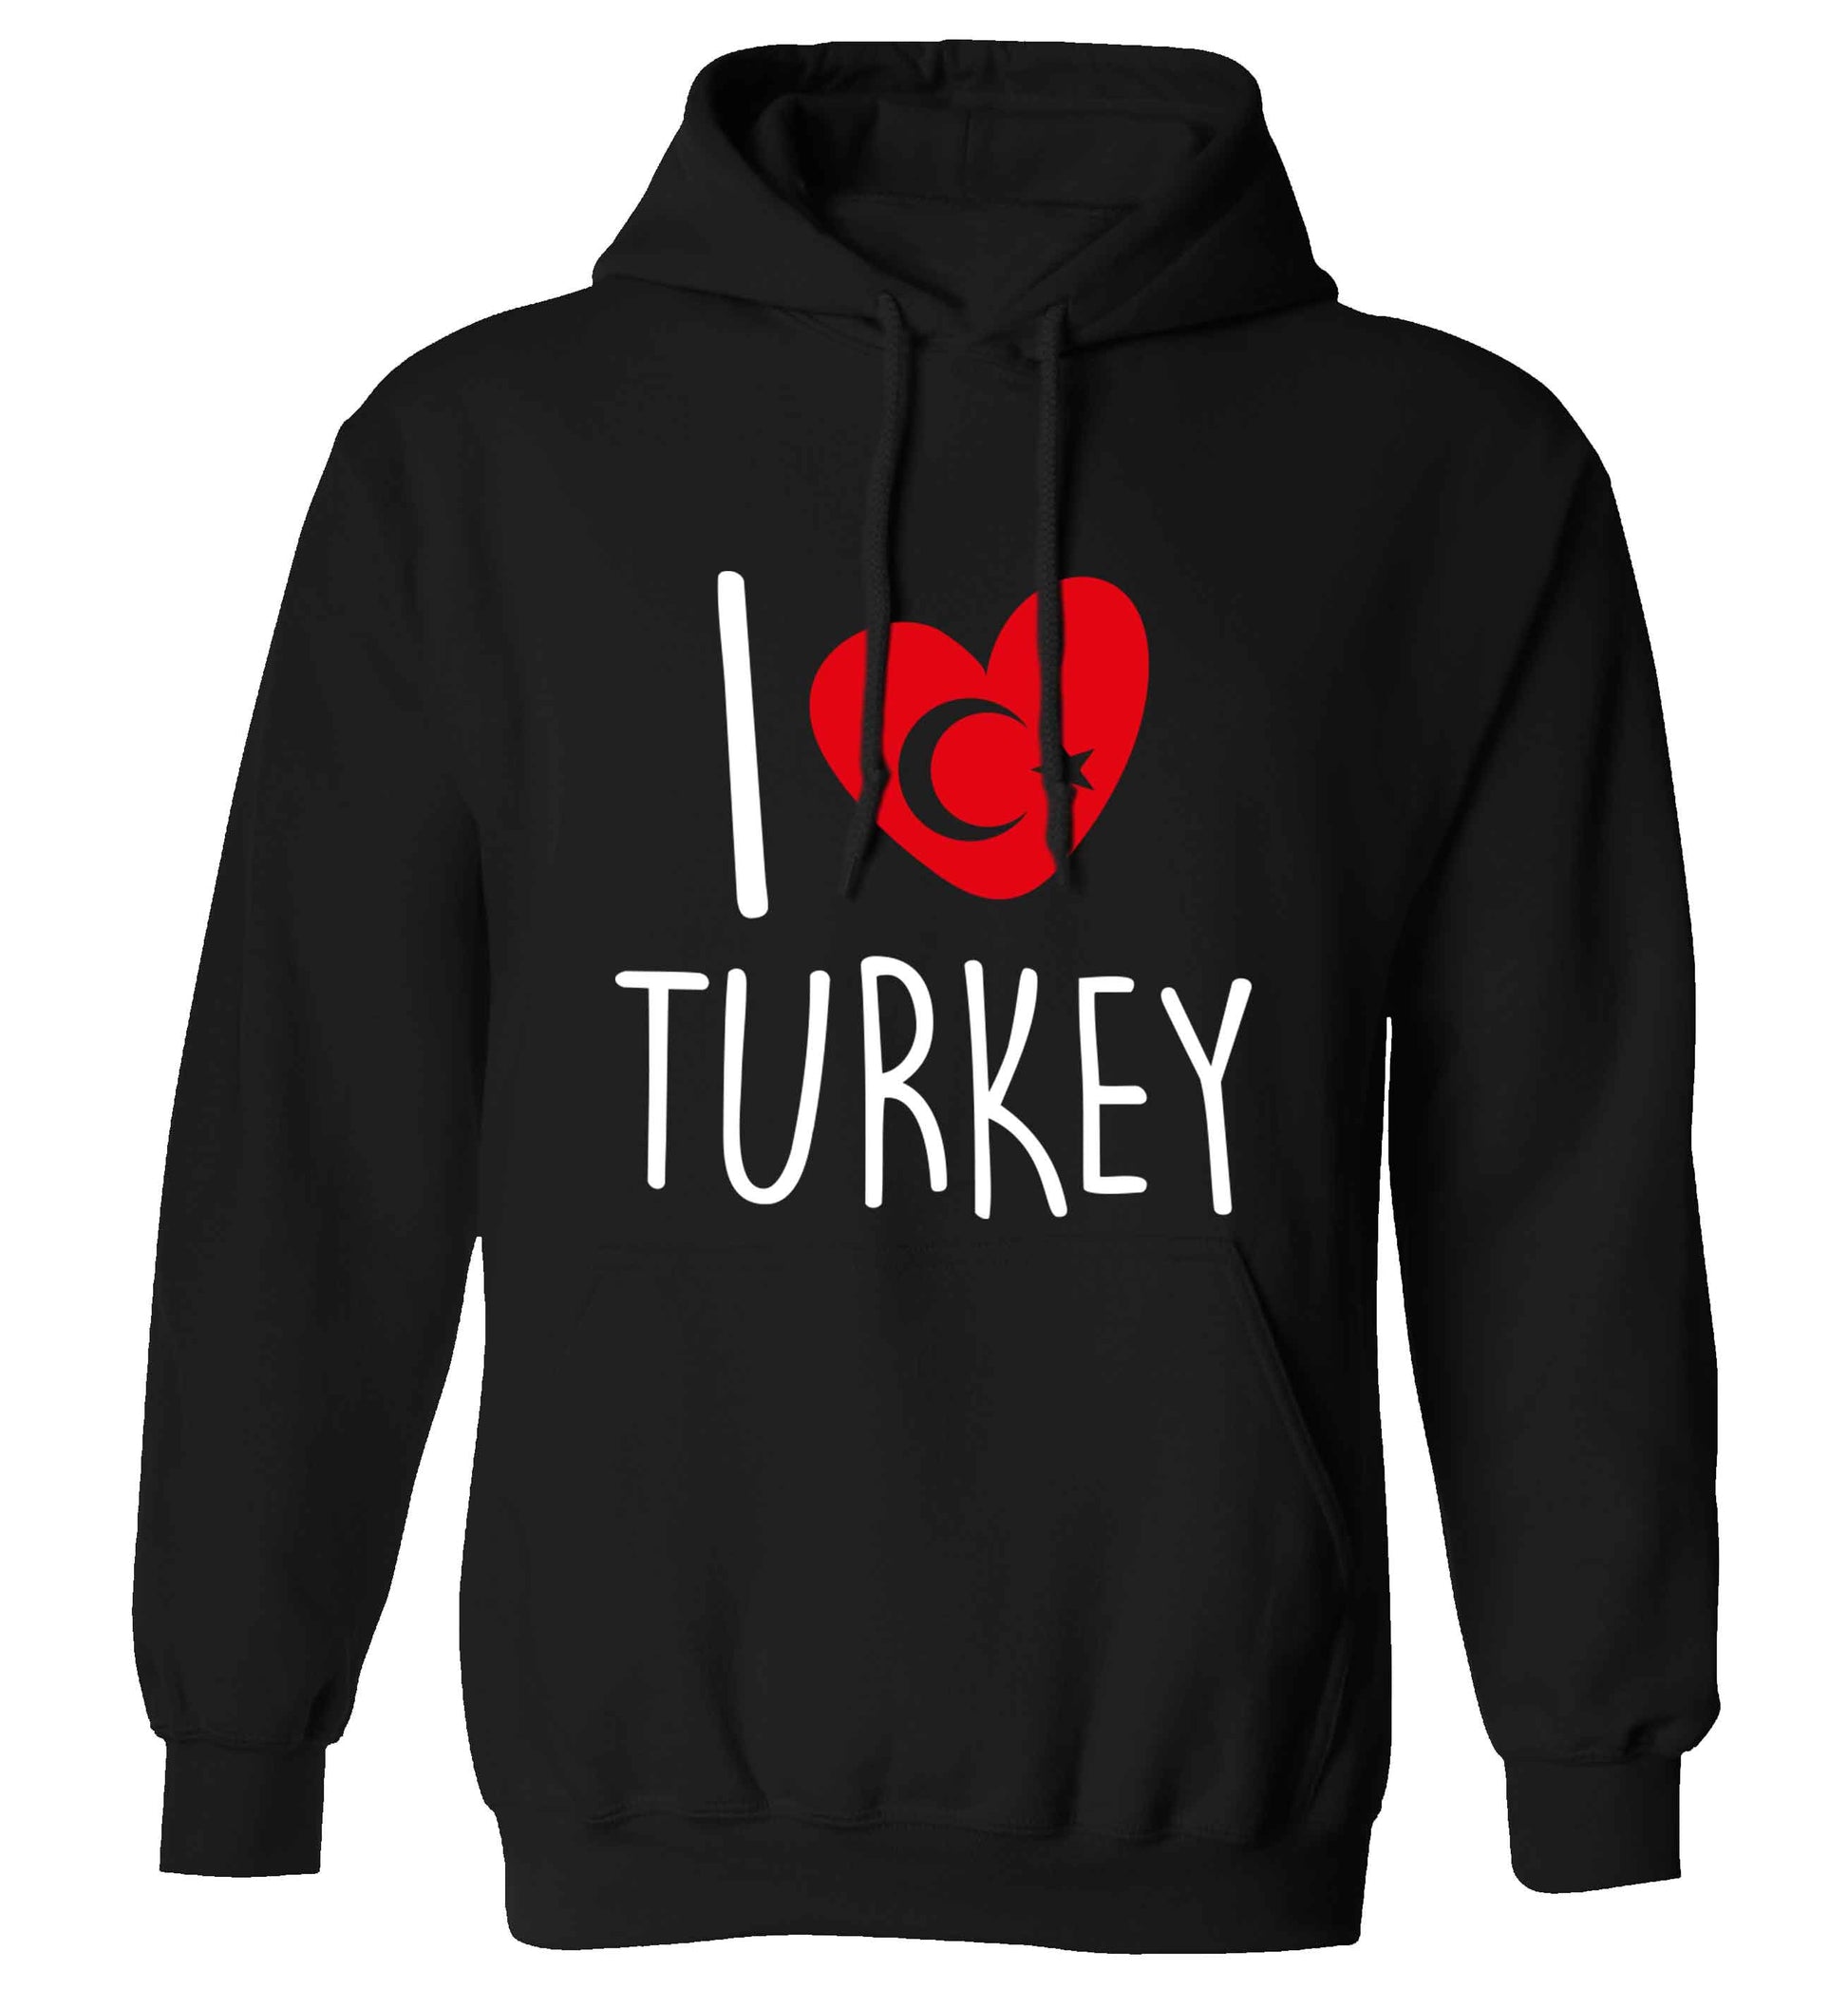 I love Turkey adults unisex black hoodie 2XL